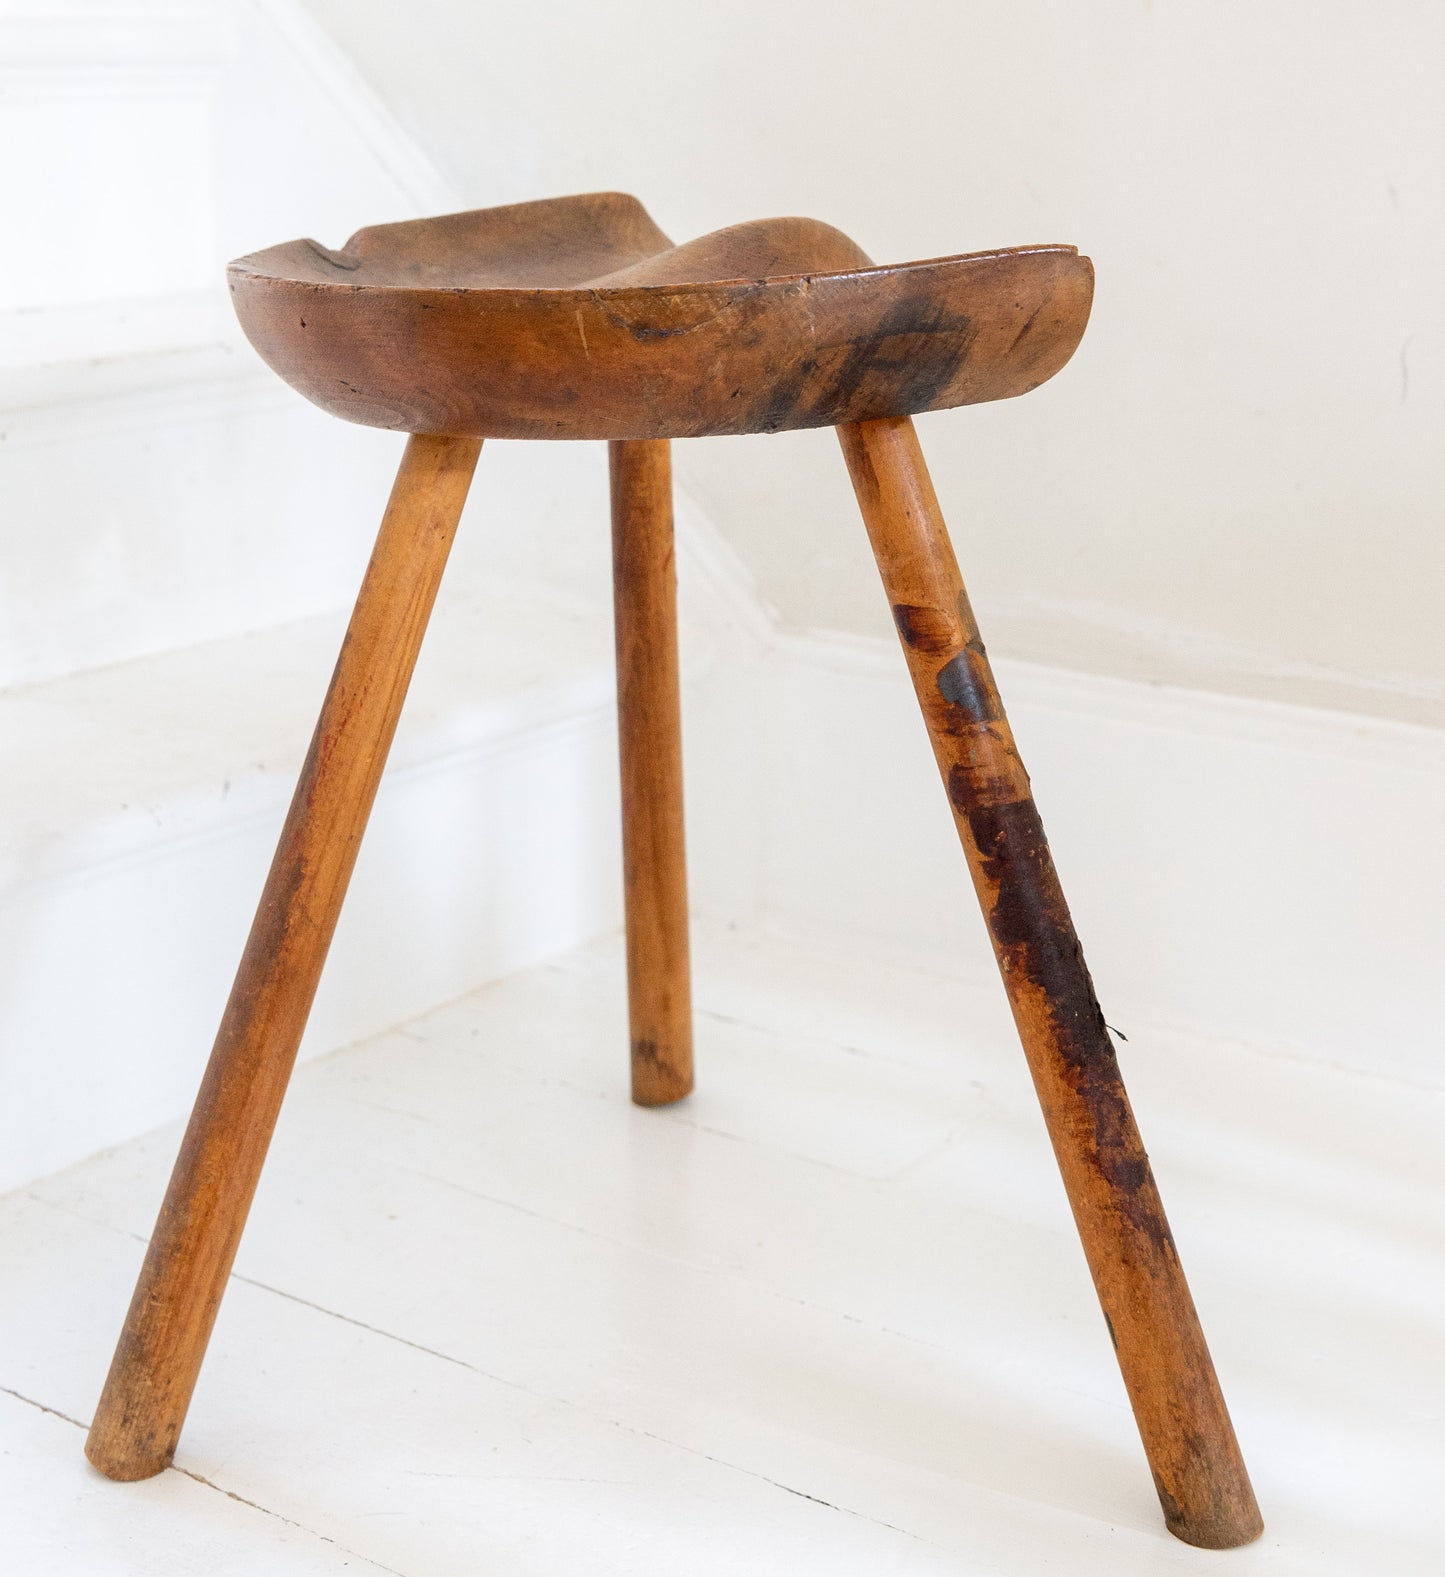 Rustic Elm Tripod stool